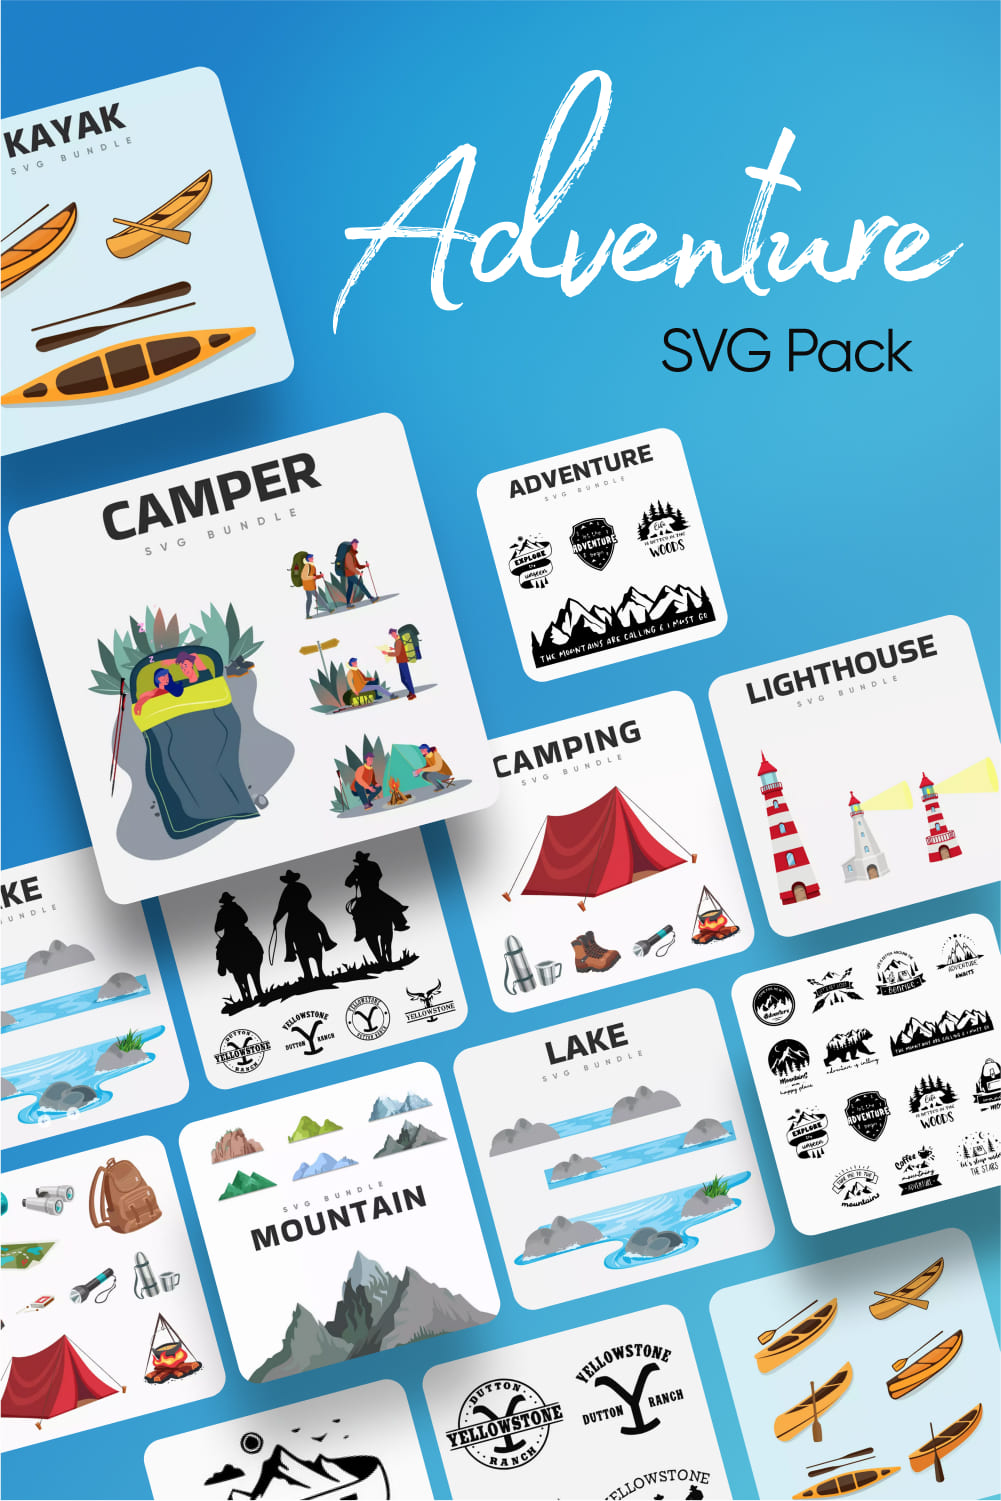 Adventure SVG Pack Pinterest.